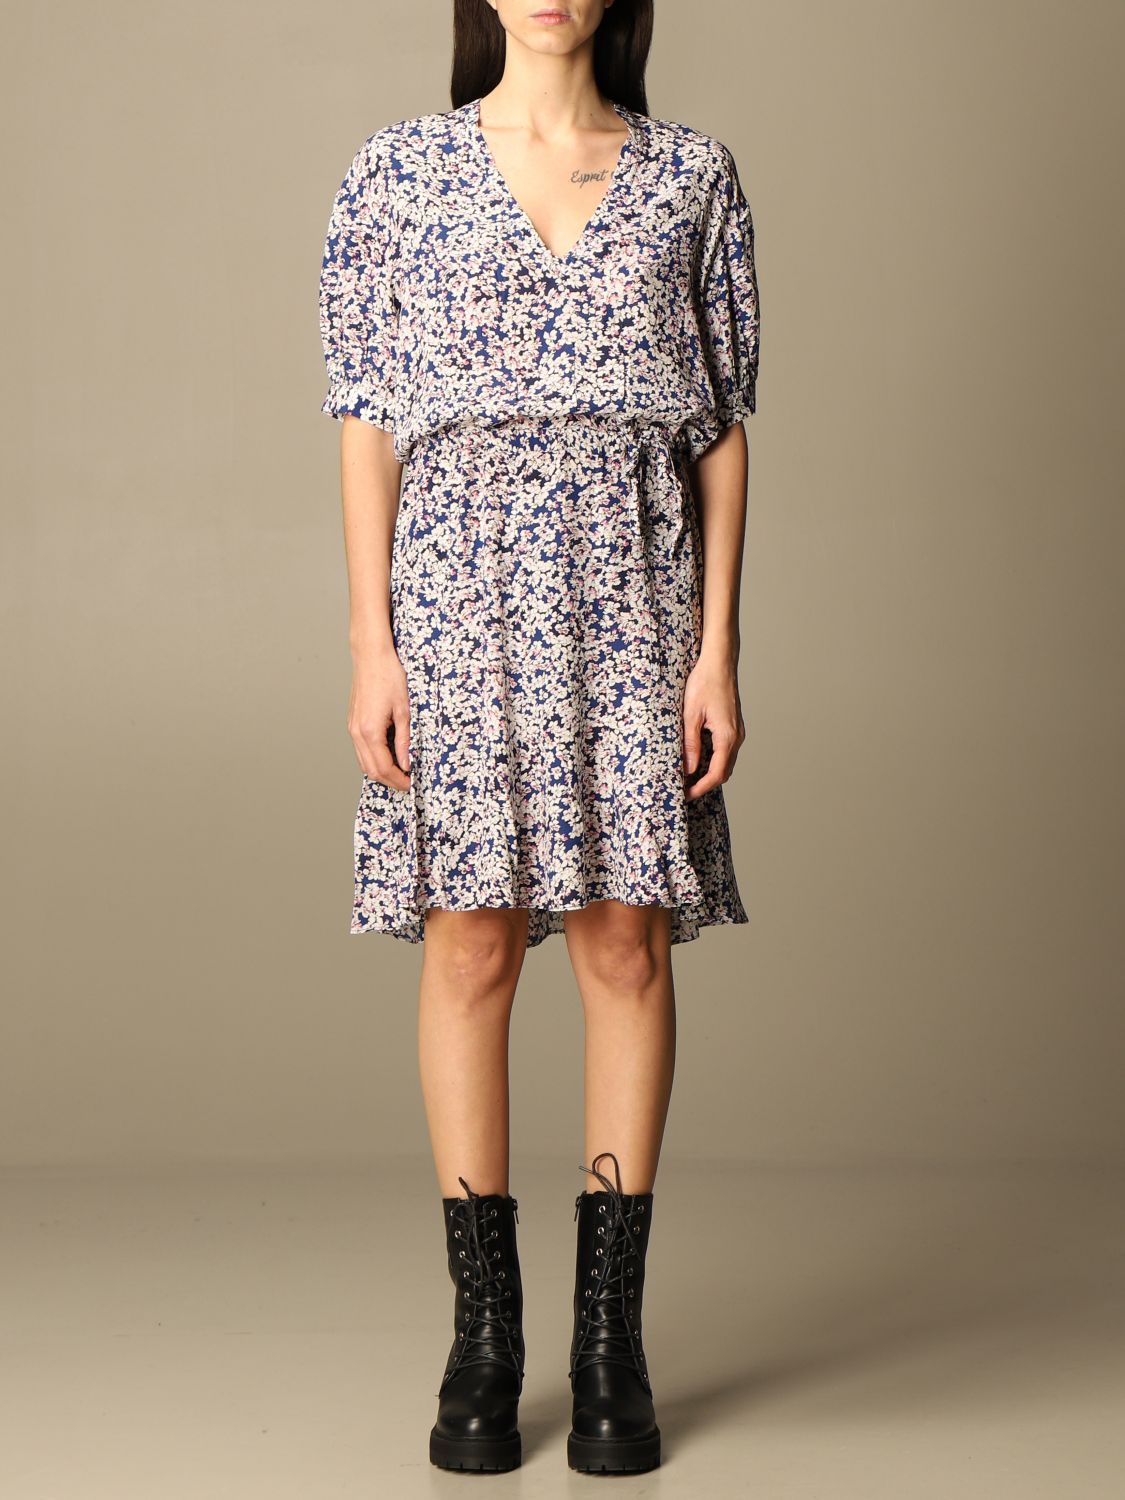 ZADIG & VOLTAIRE: short dress with floral pattern - Blue | Zadig ...